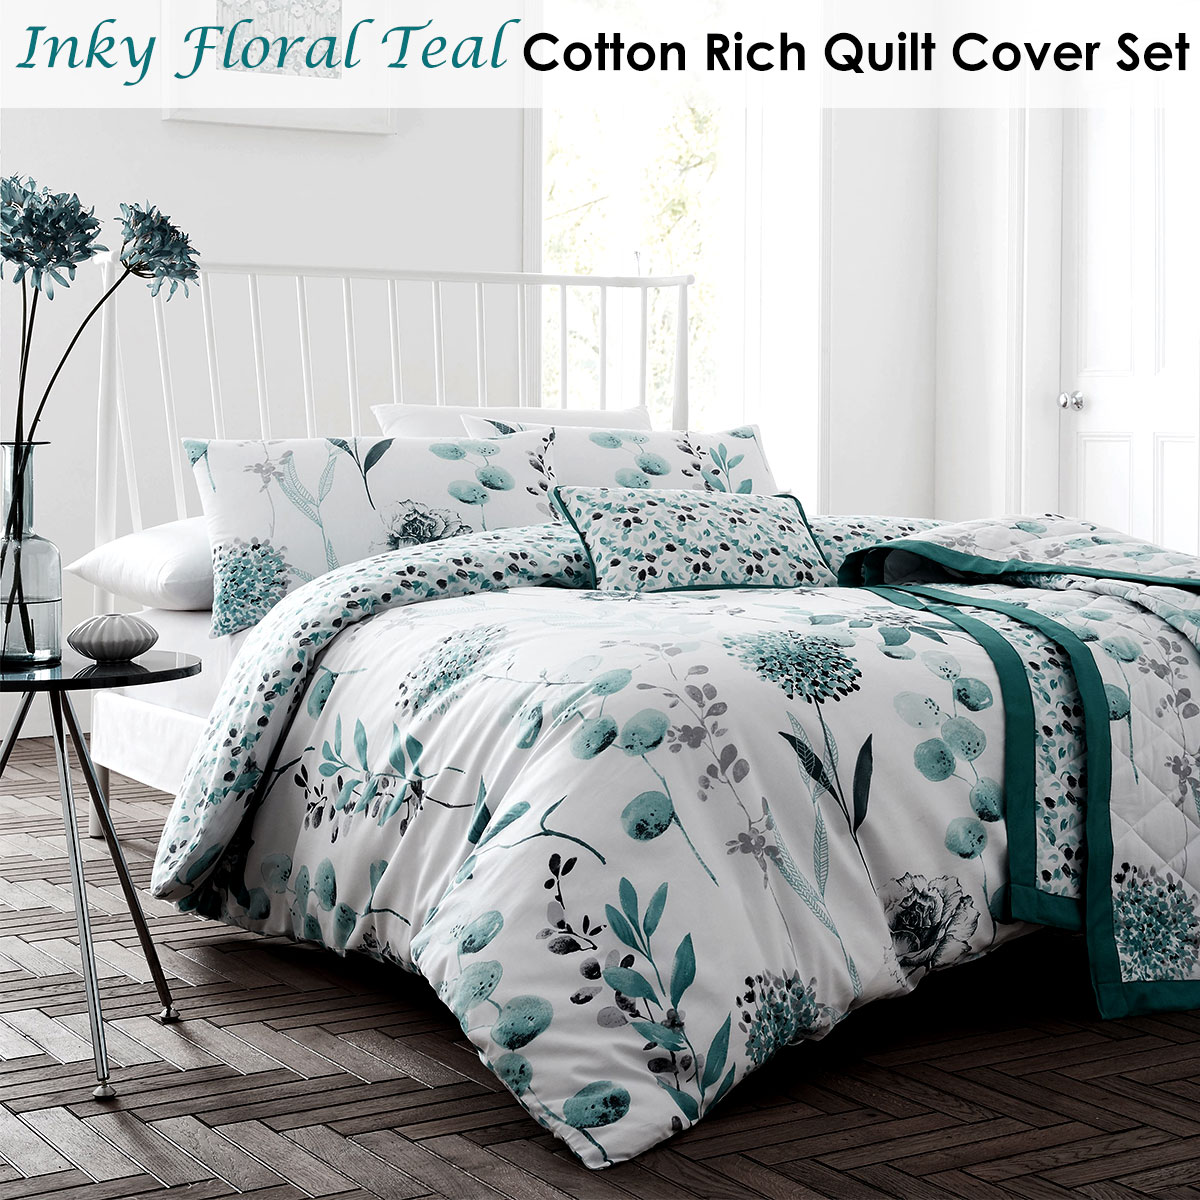 Ink Floral Teal Cotton Rich Quilt Cover Set